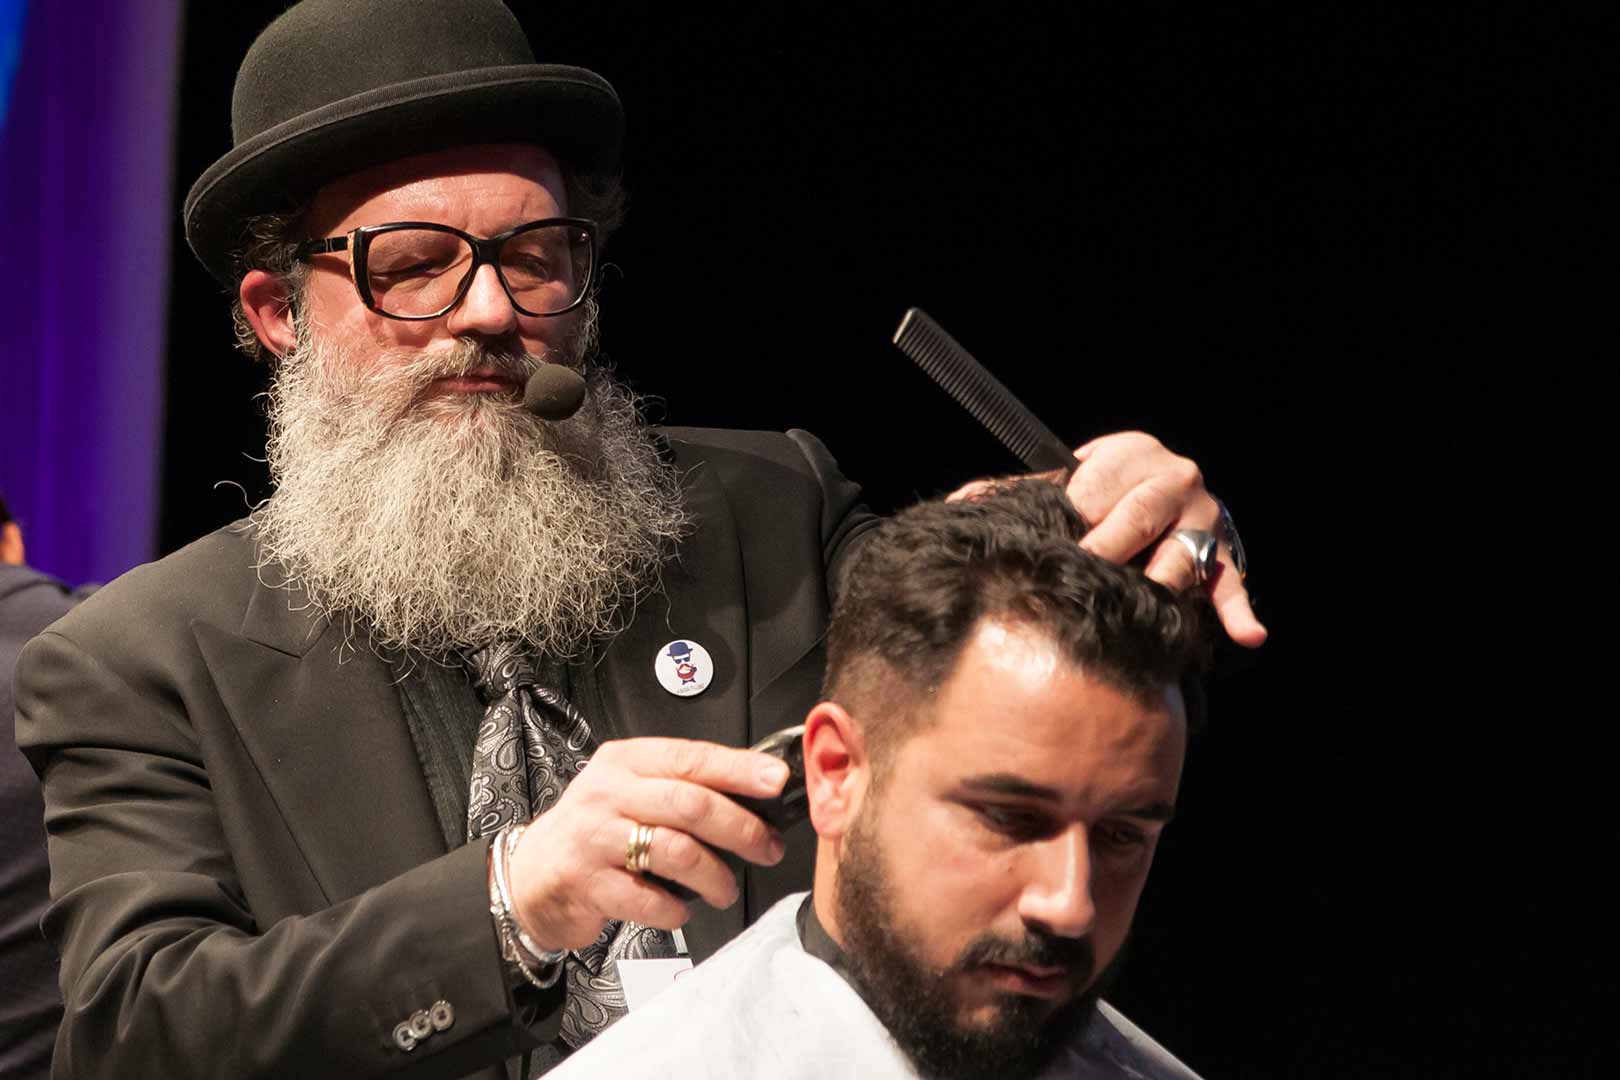 hairGAMES-International-Barber-Awards-Co-das-waren-die-Haare-2017-2126-33